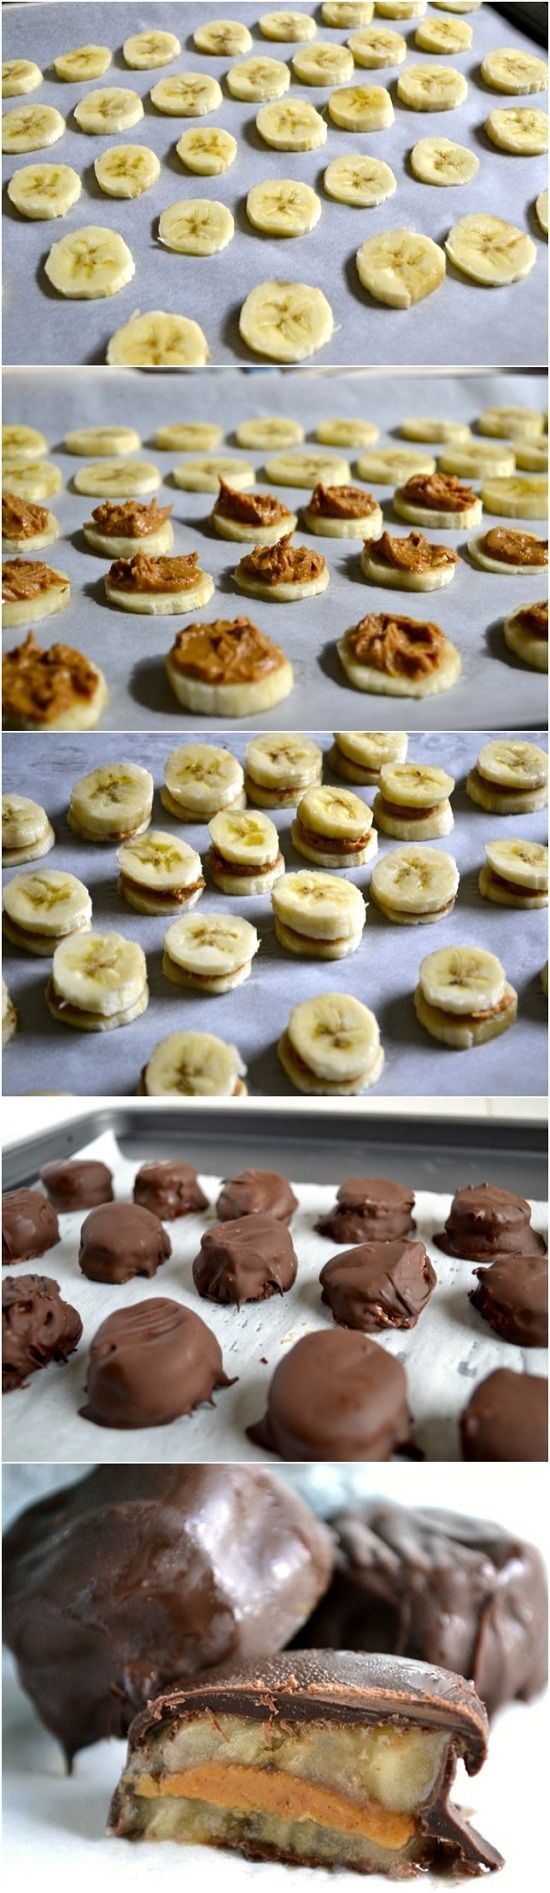 banana snacks5